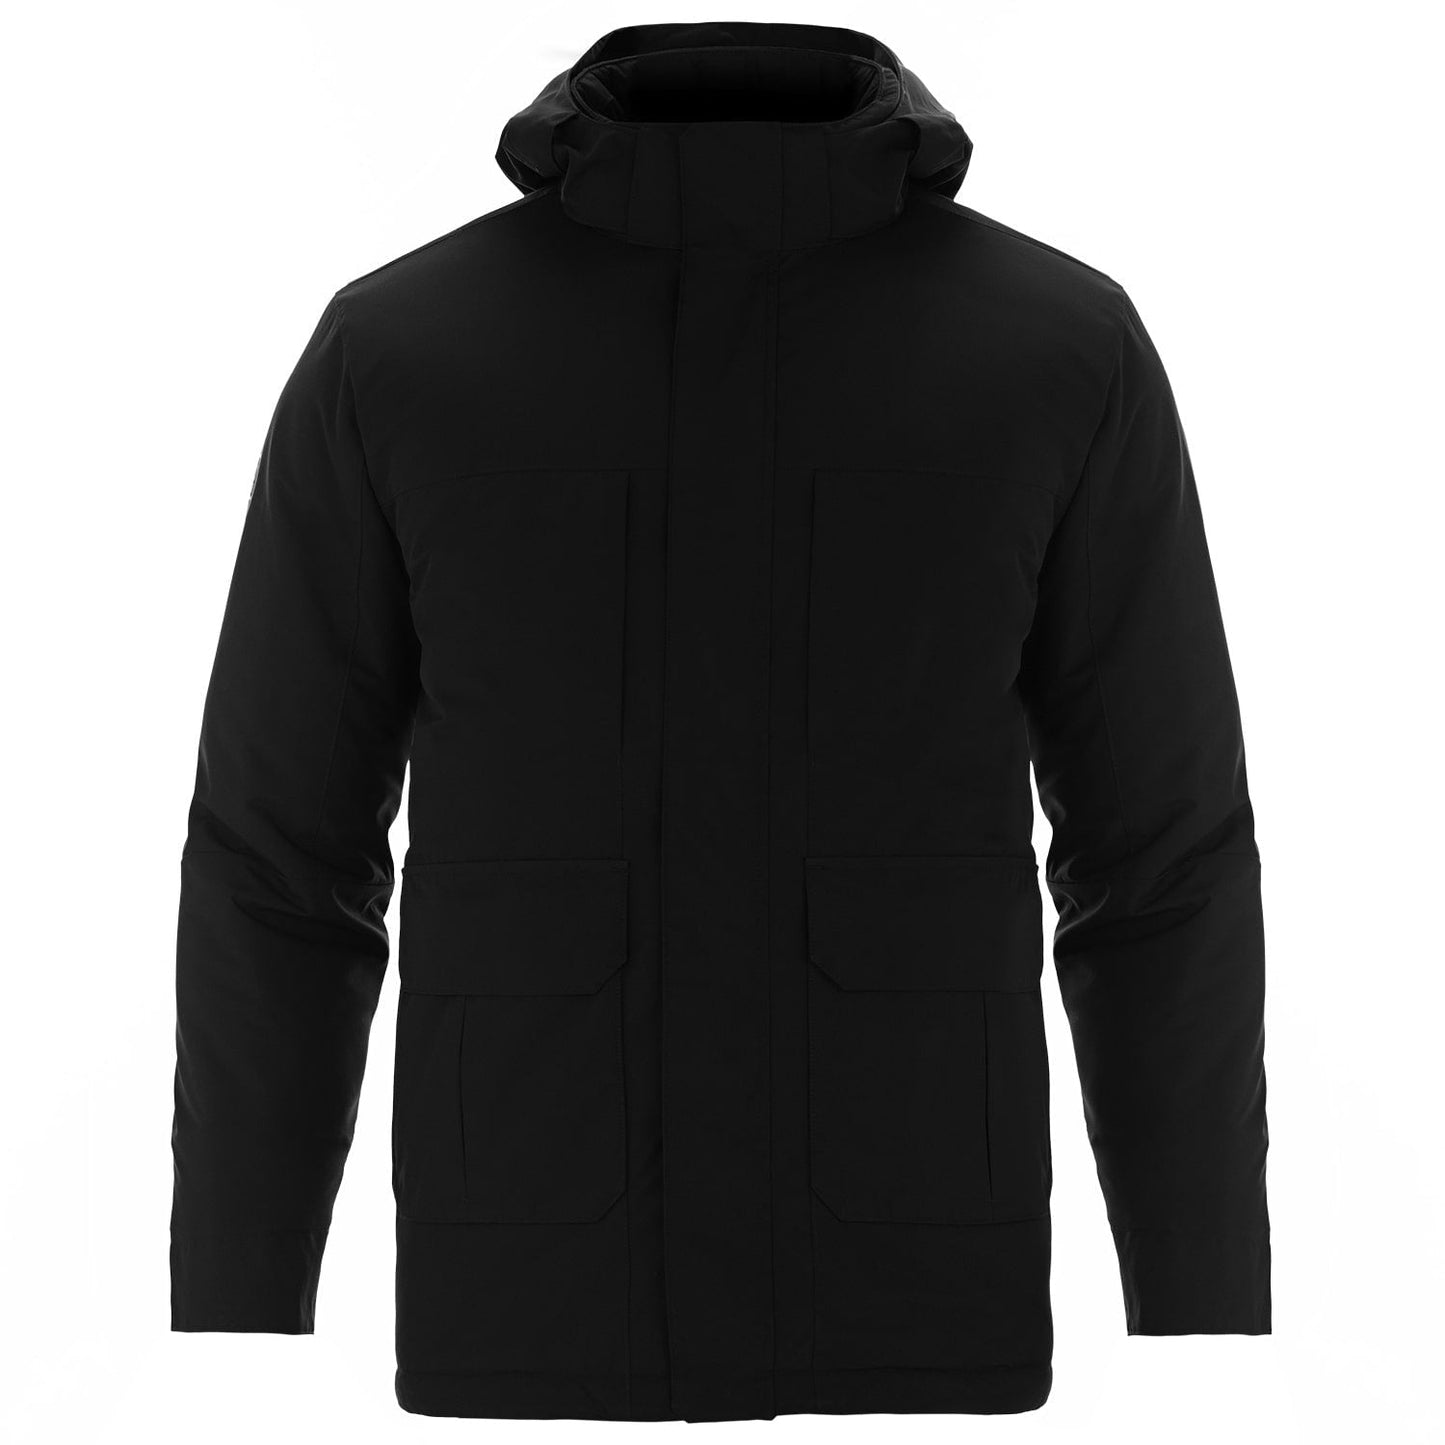 L01080 - Ideal Men’s Utility Parka Black / XS Jacket